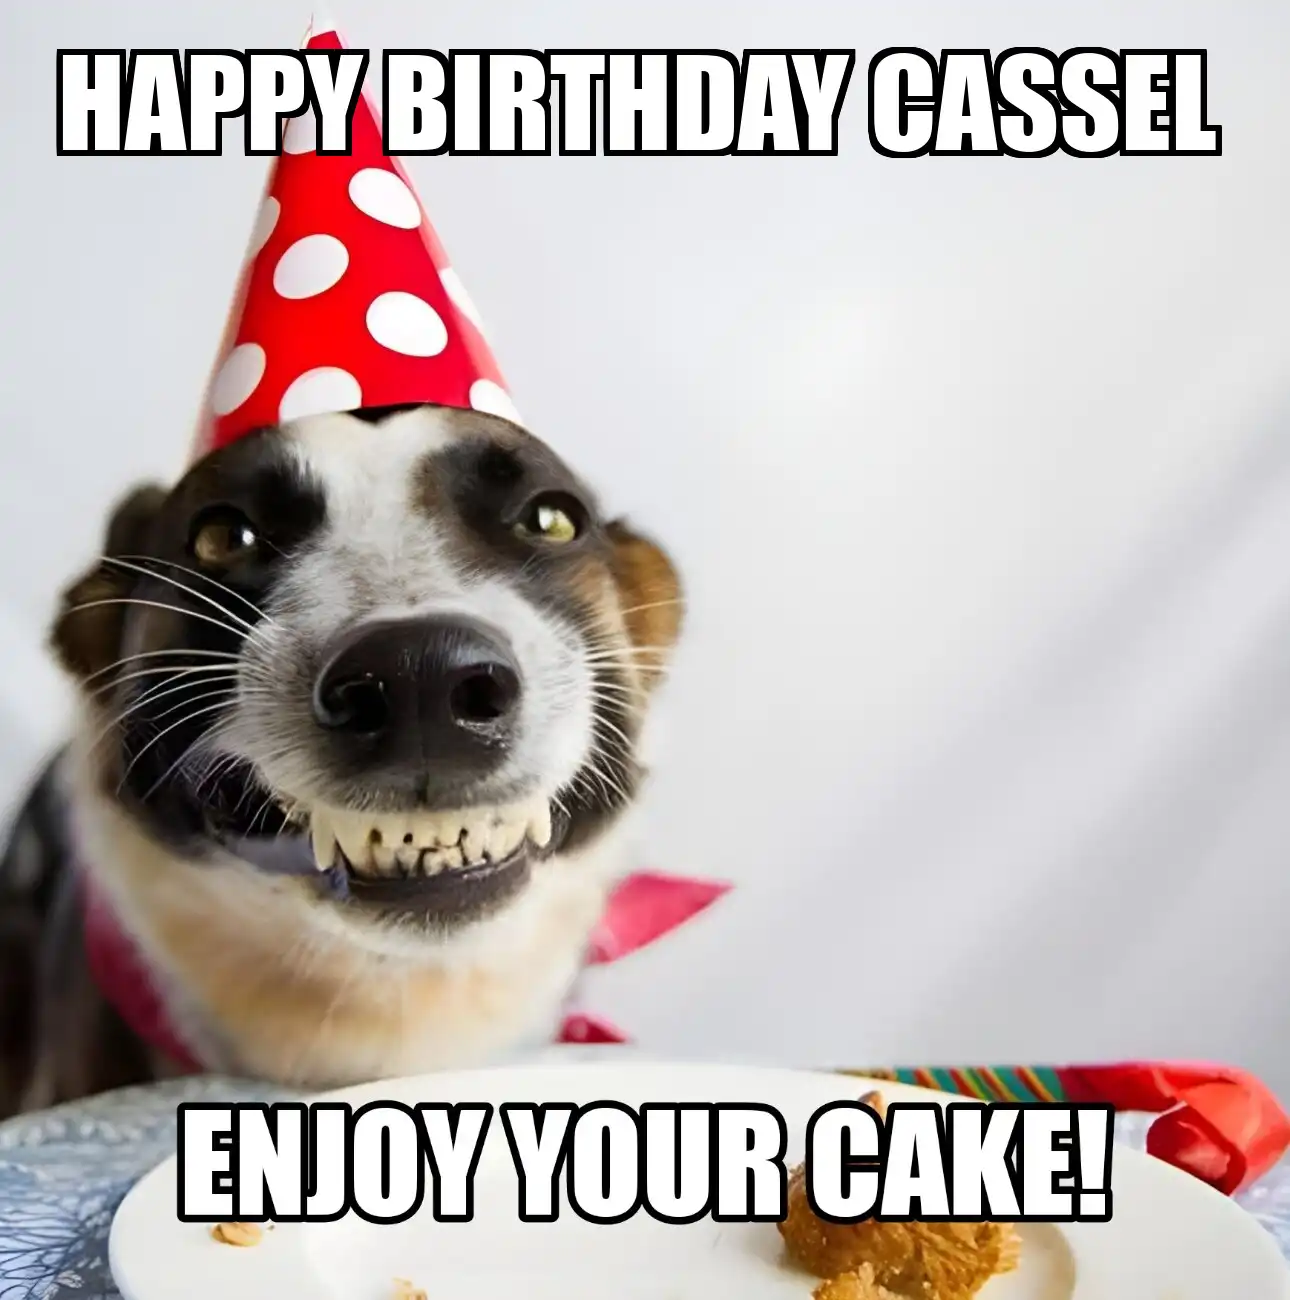 Happy Birthday Cassel Enjoy Your Cake Dog Meme